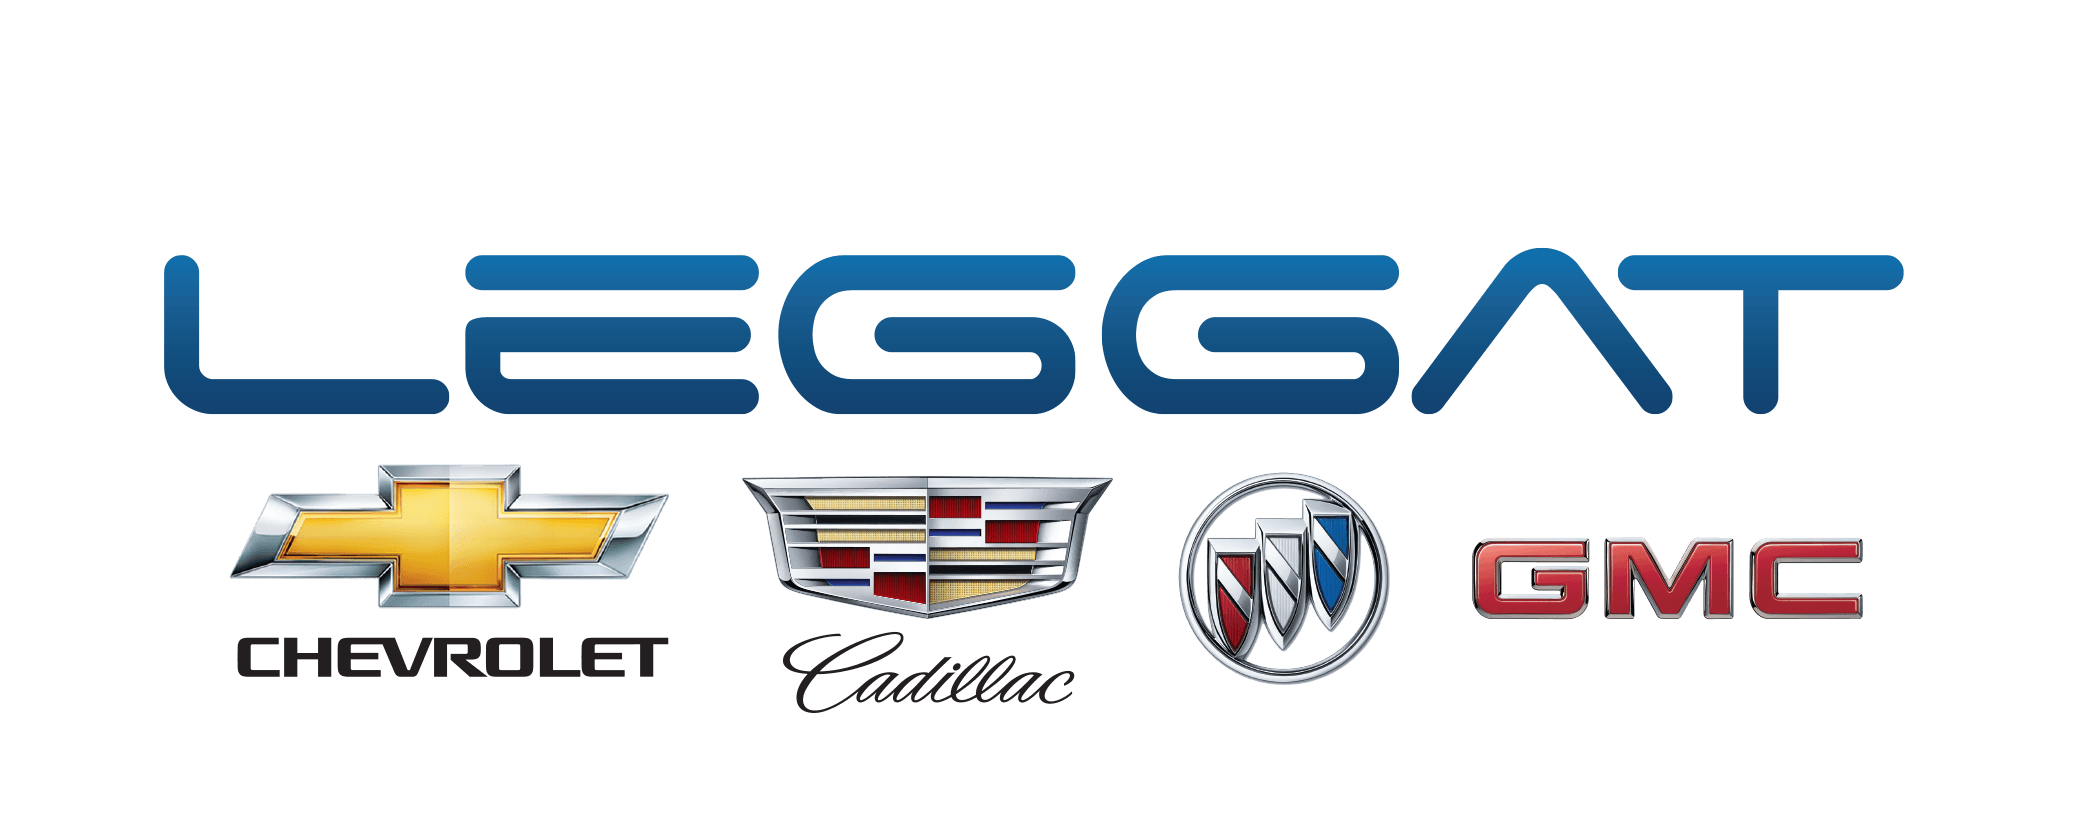 Certified Cadillac Logo - Burlington 2015 Cadillac ATS Sedan: Certified Car for Sale ...